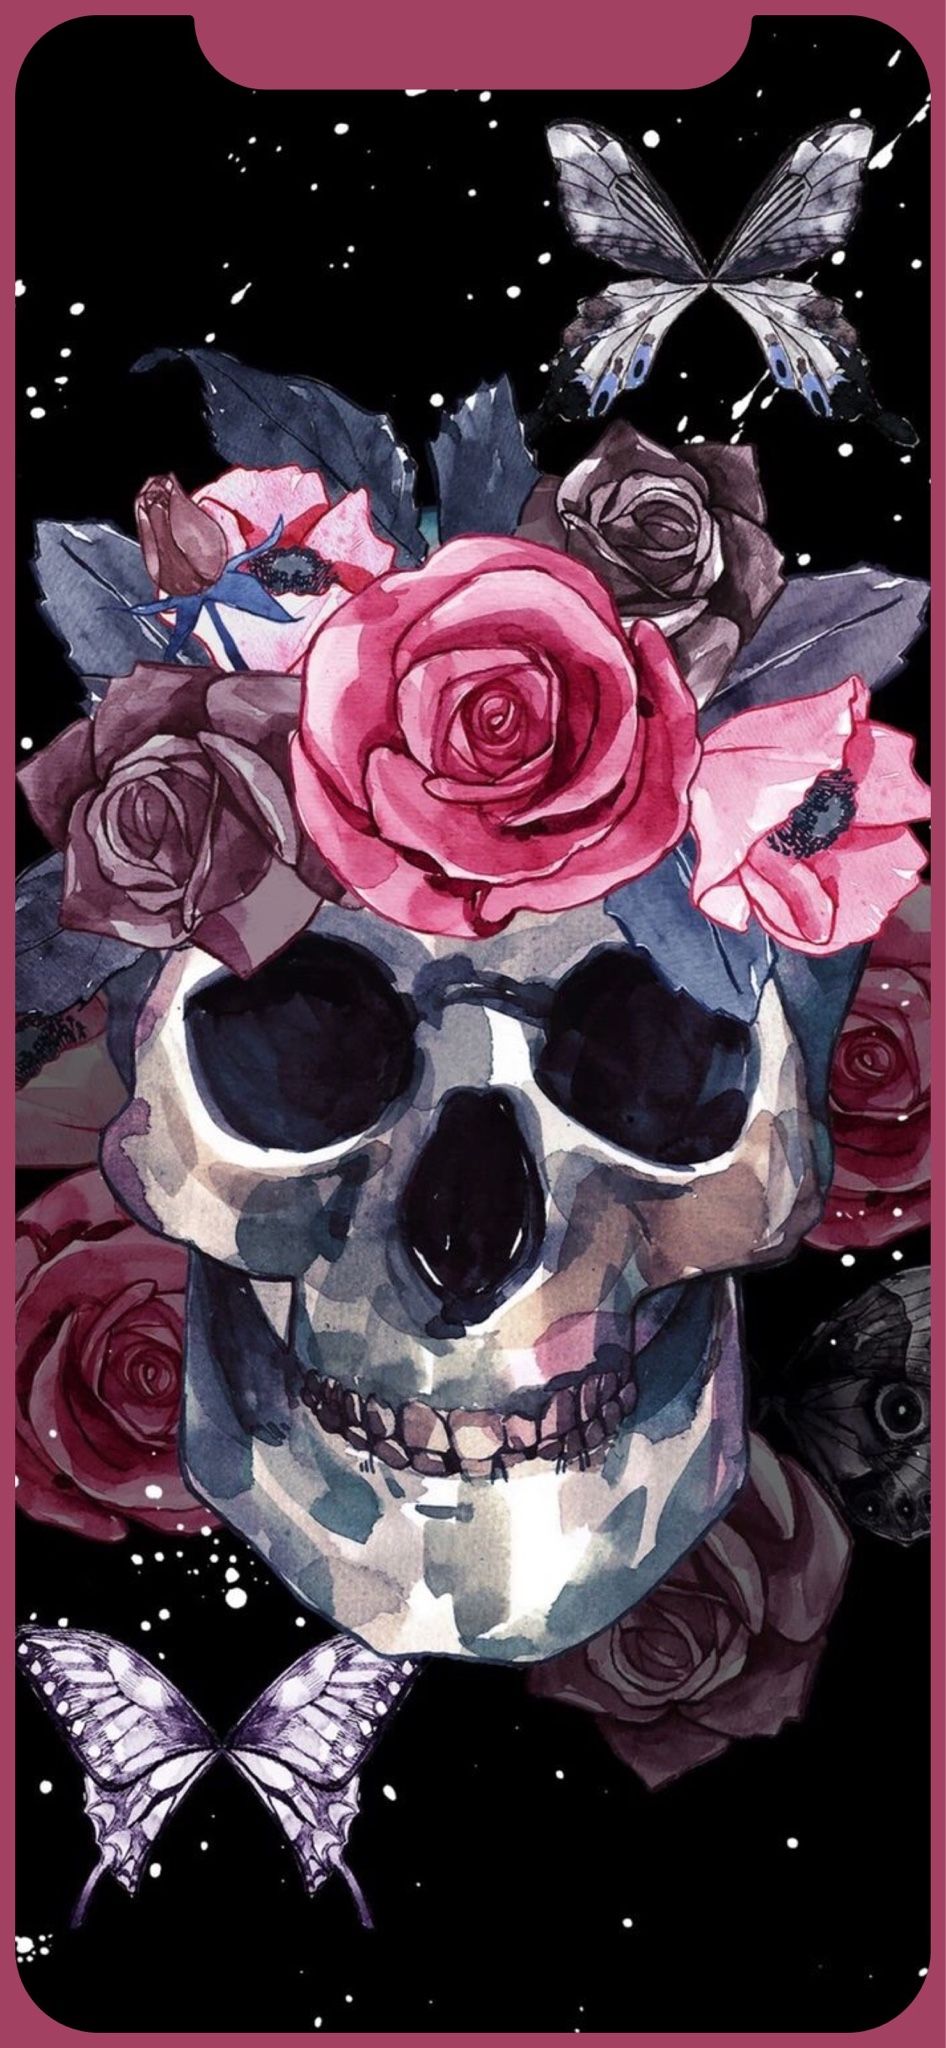 flor fondos de pantalla iphone,caja del teléfono móvil,rosa,rosado,flor,cráneo